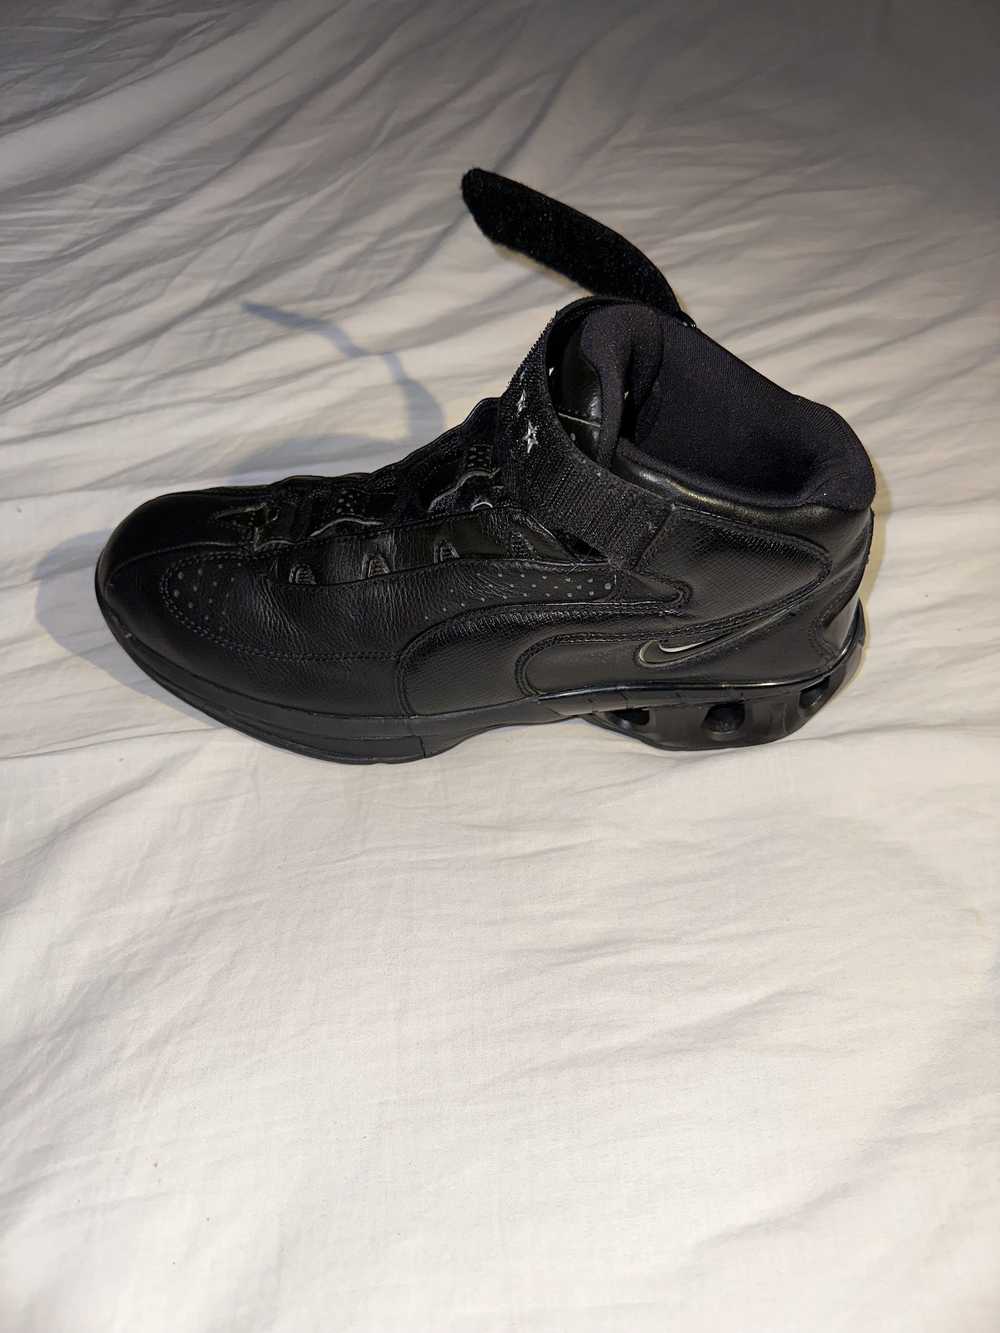 Nike 2005 Nike flight, all black basketball shoe - image 3